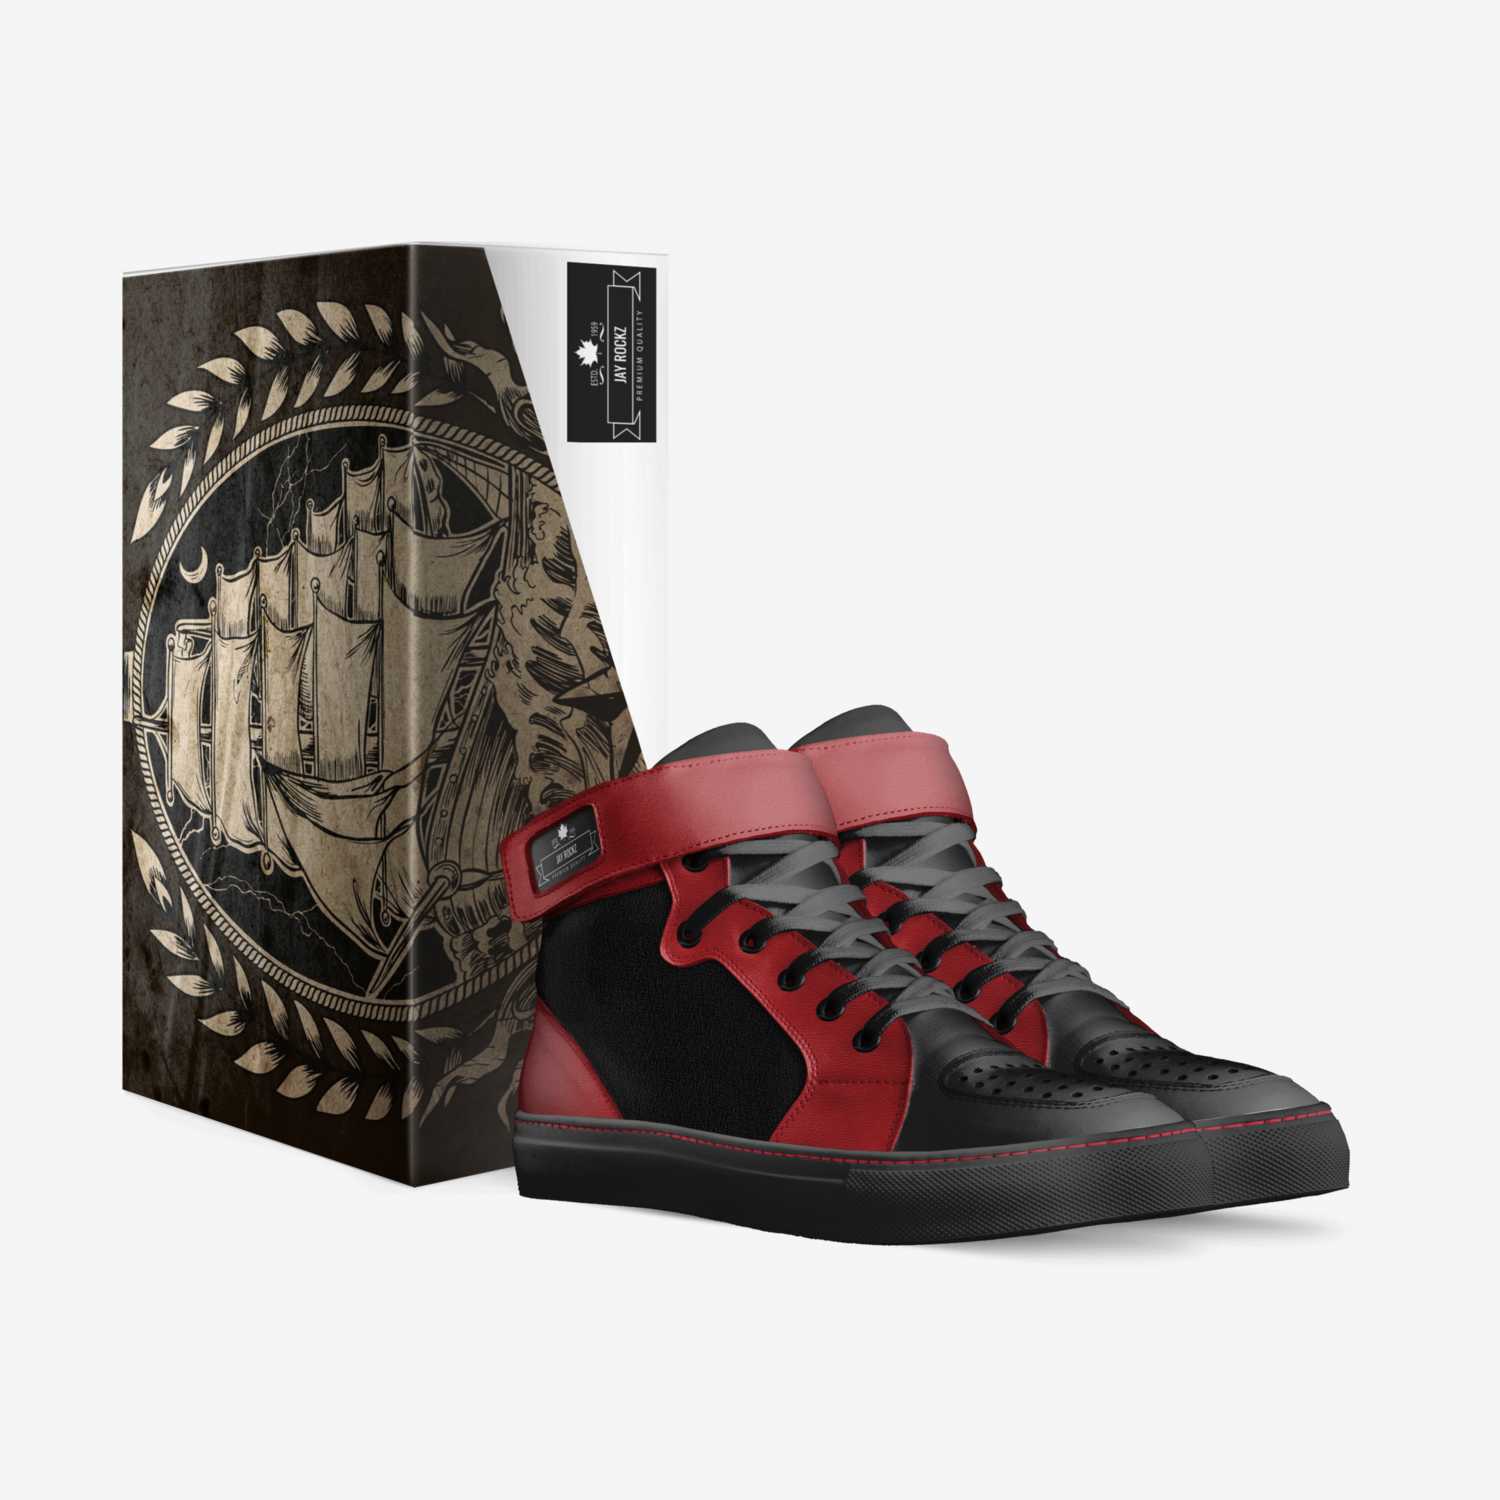 Jay rockz custom made in Italy shoes by Joseph | Box view